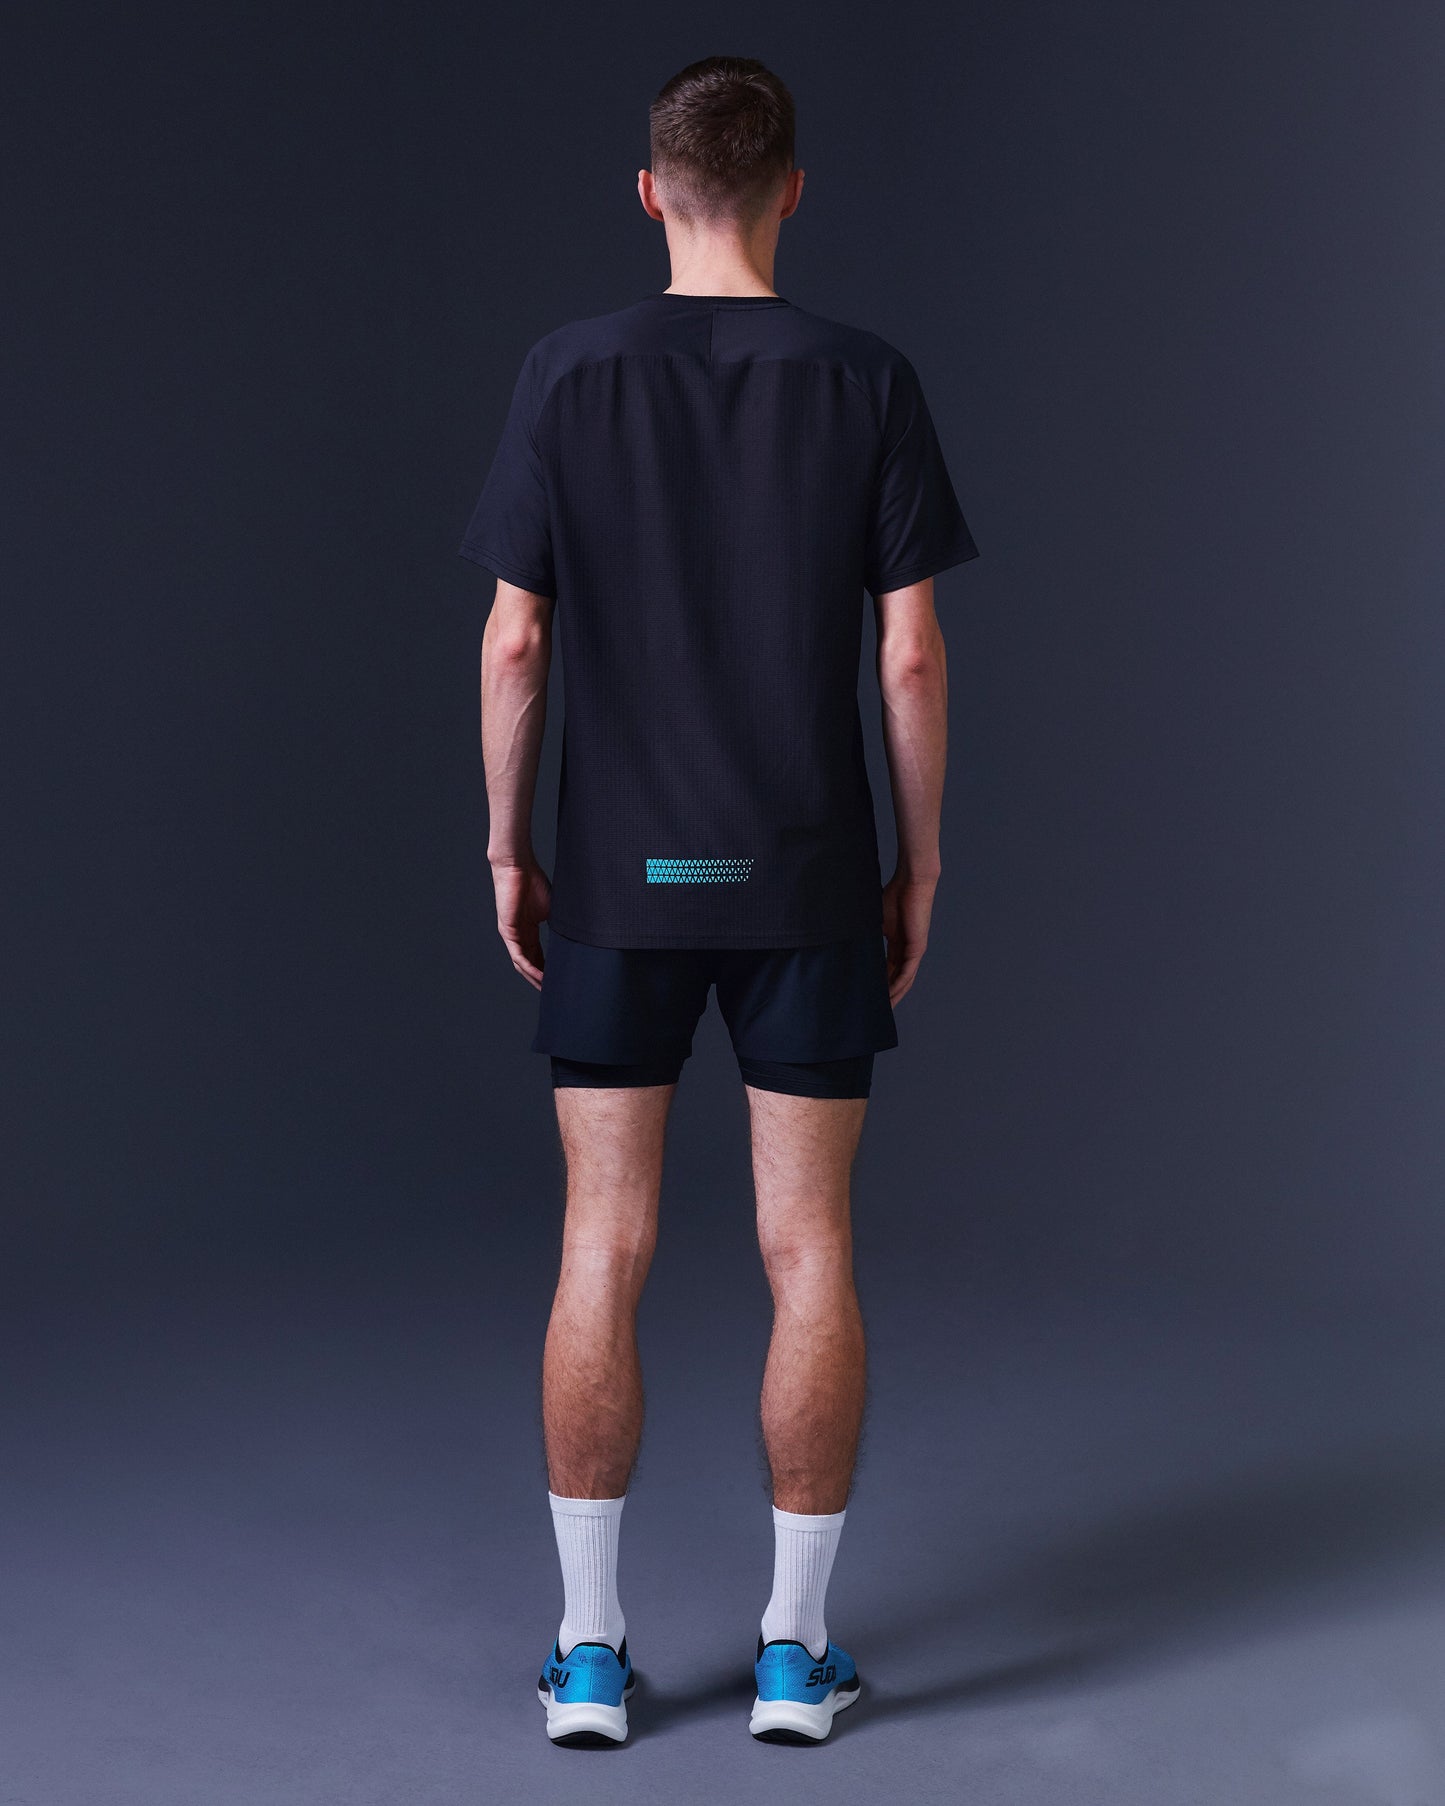 SUDU SRT SS 01 Run Short Sleeve T-Shirt - Black Beauty / Aquarius Short Sleeve T-Shirt